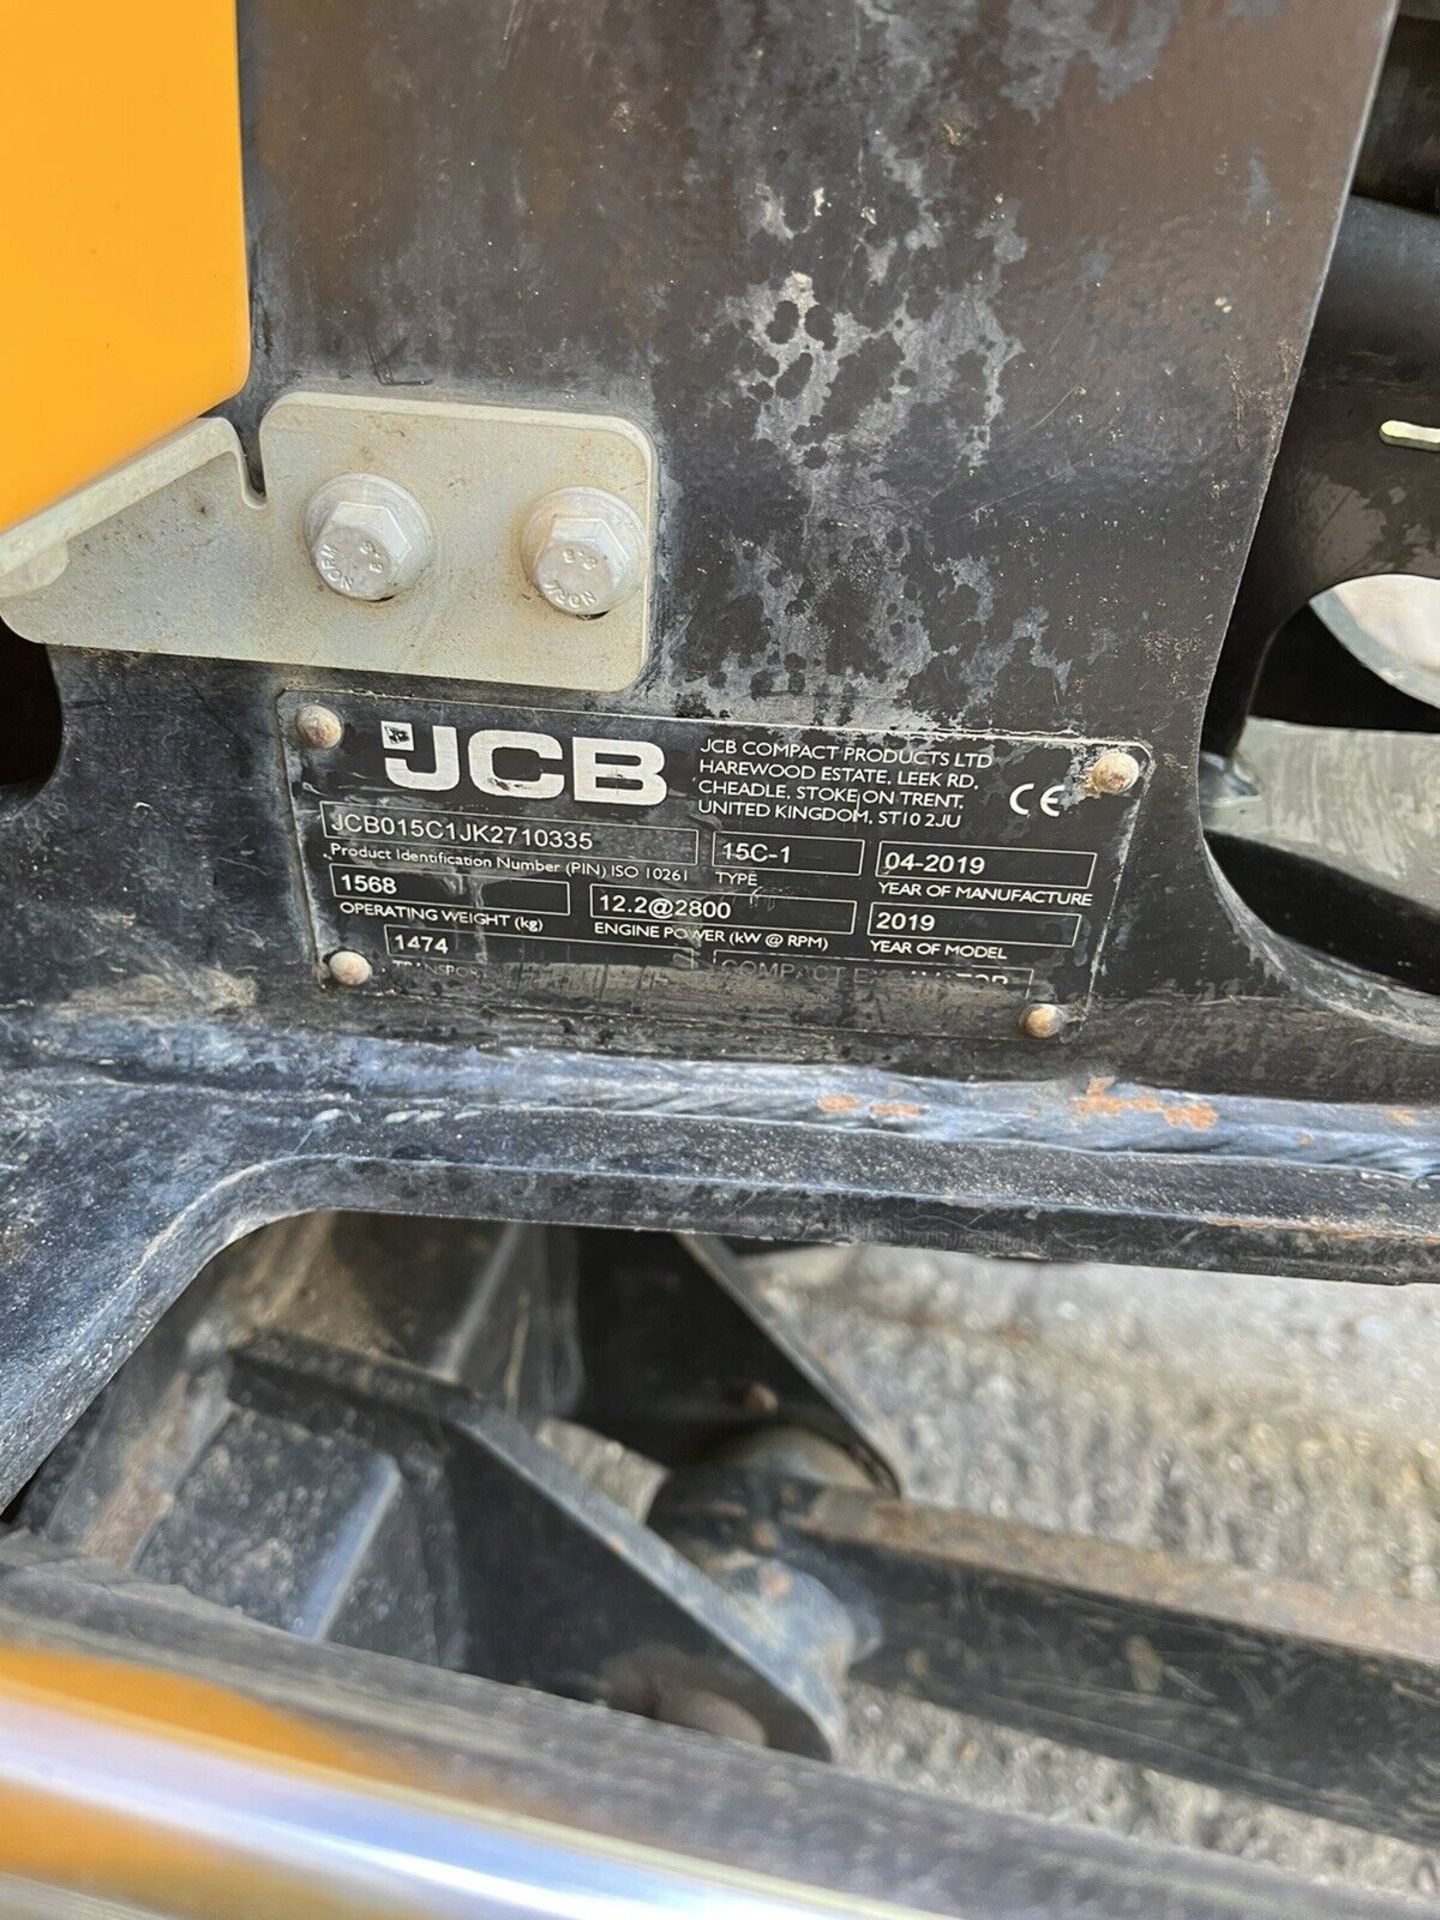 JCB 15C-1 MINI EXCAVATOR 2019 ONLY 860hrs, Mini Digger - Image 9 of 11